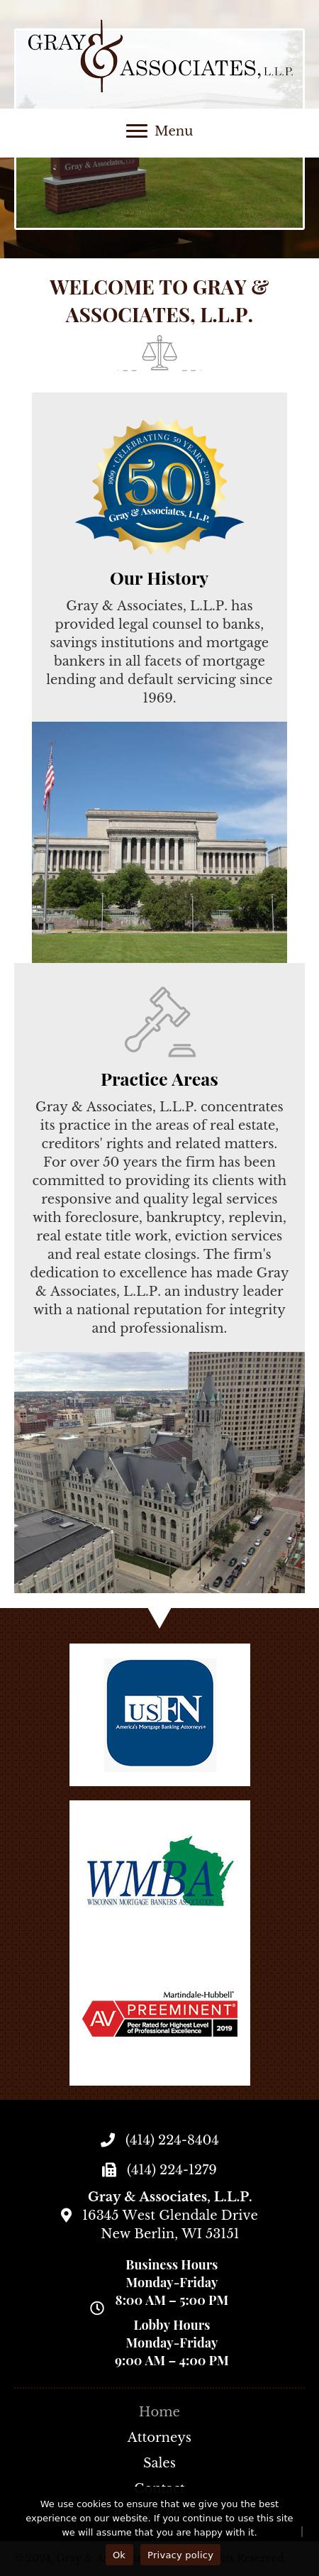 Gray & Associates LLP - New Berlin WI Lawyers